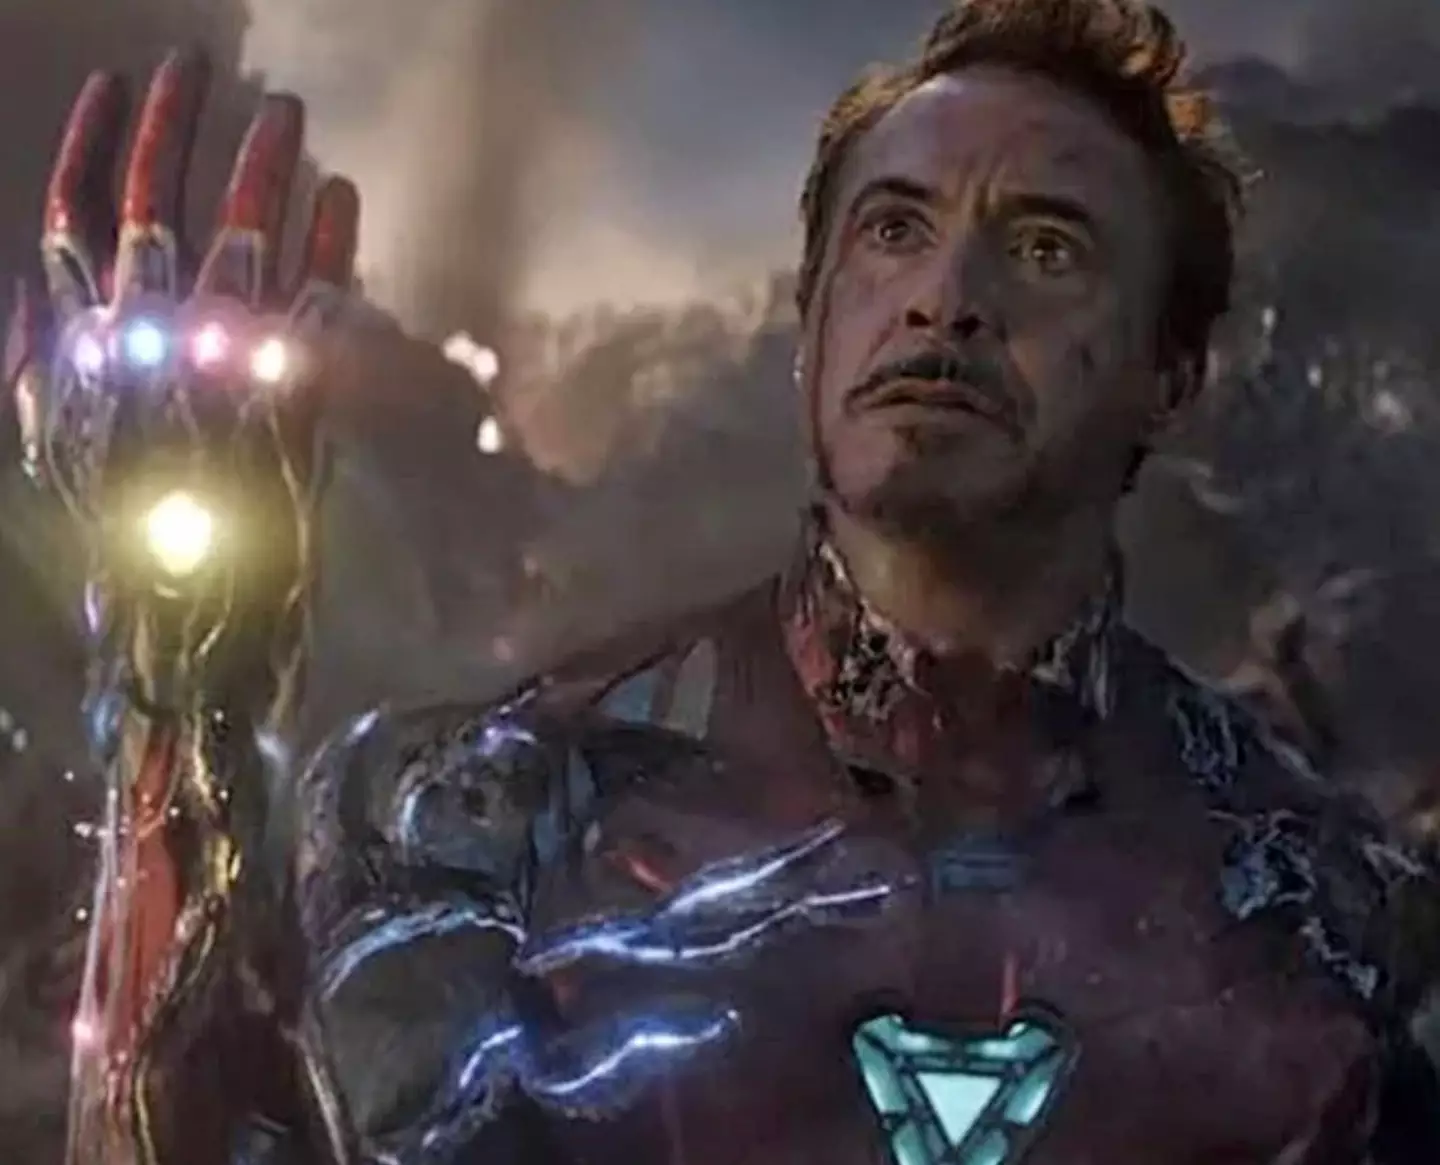 Robert Downey Jr. starred as Iron Man in the MCU.